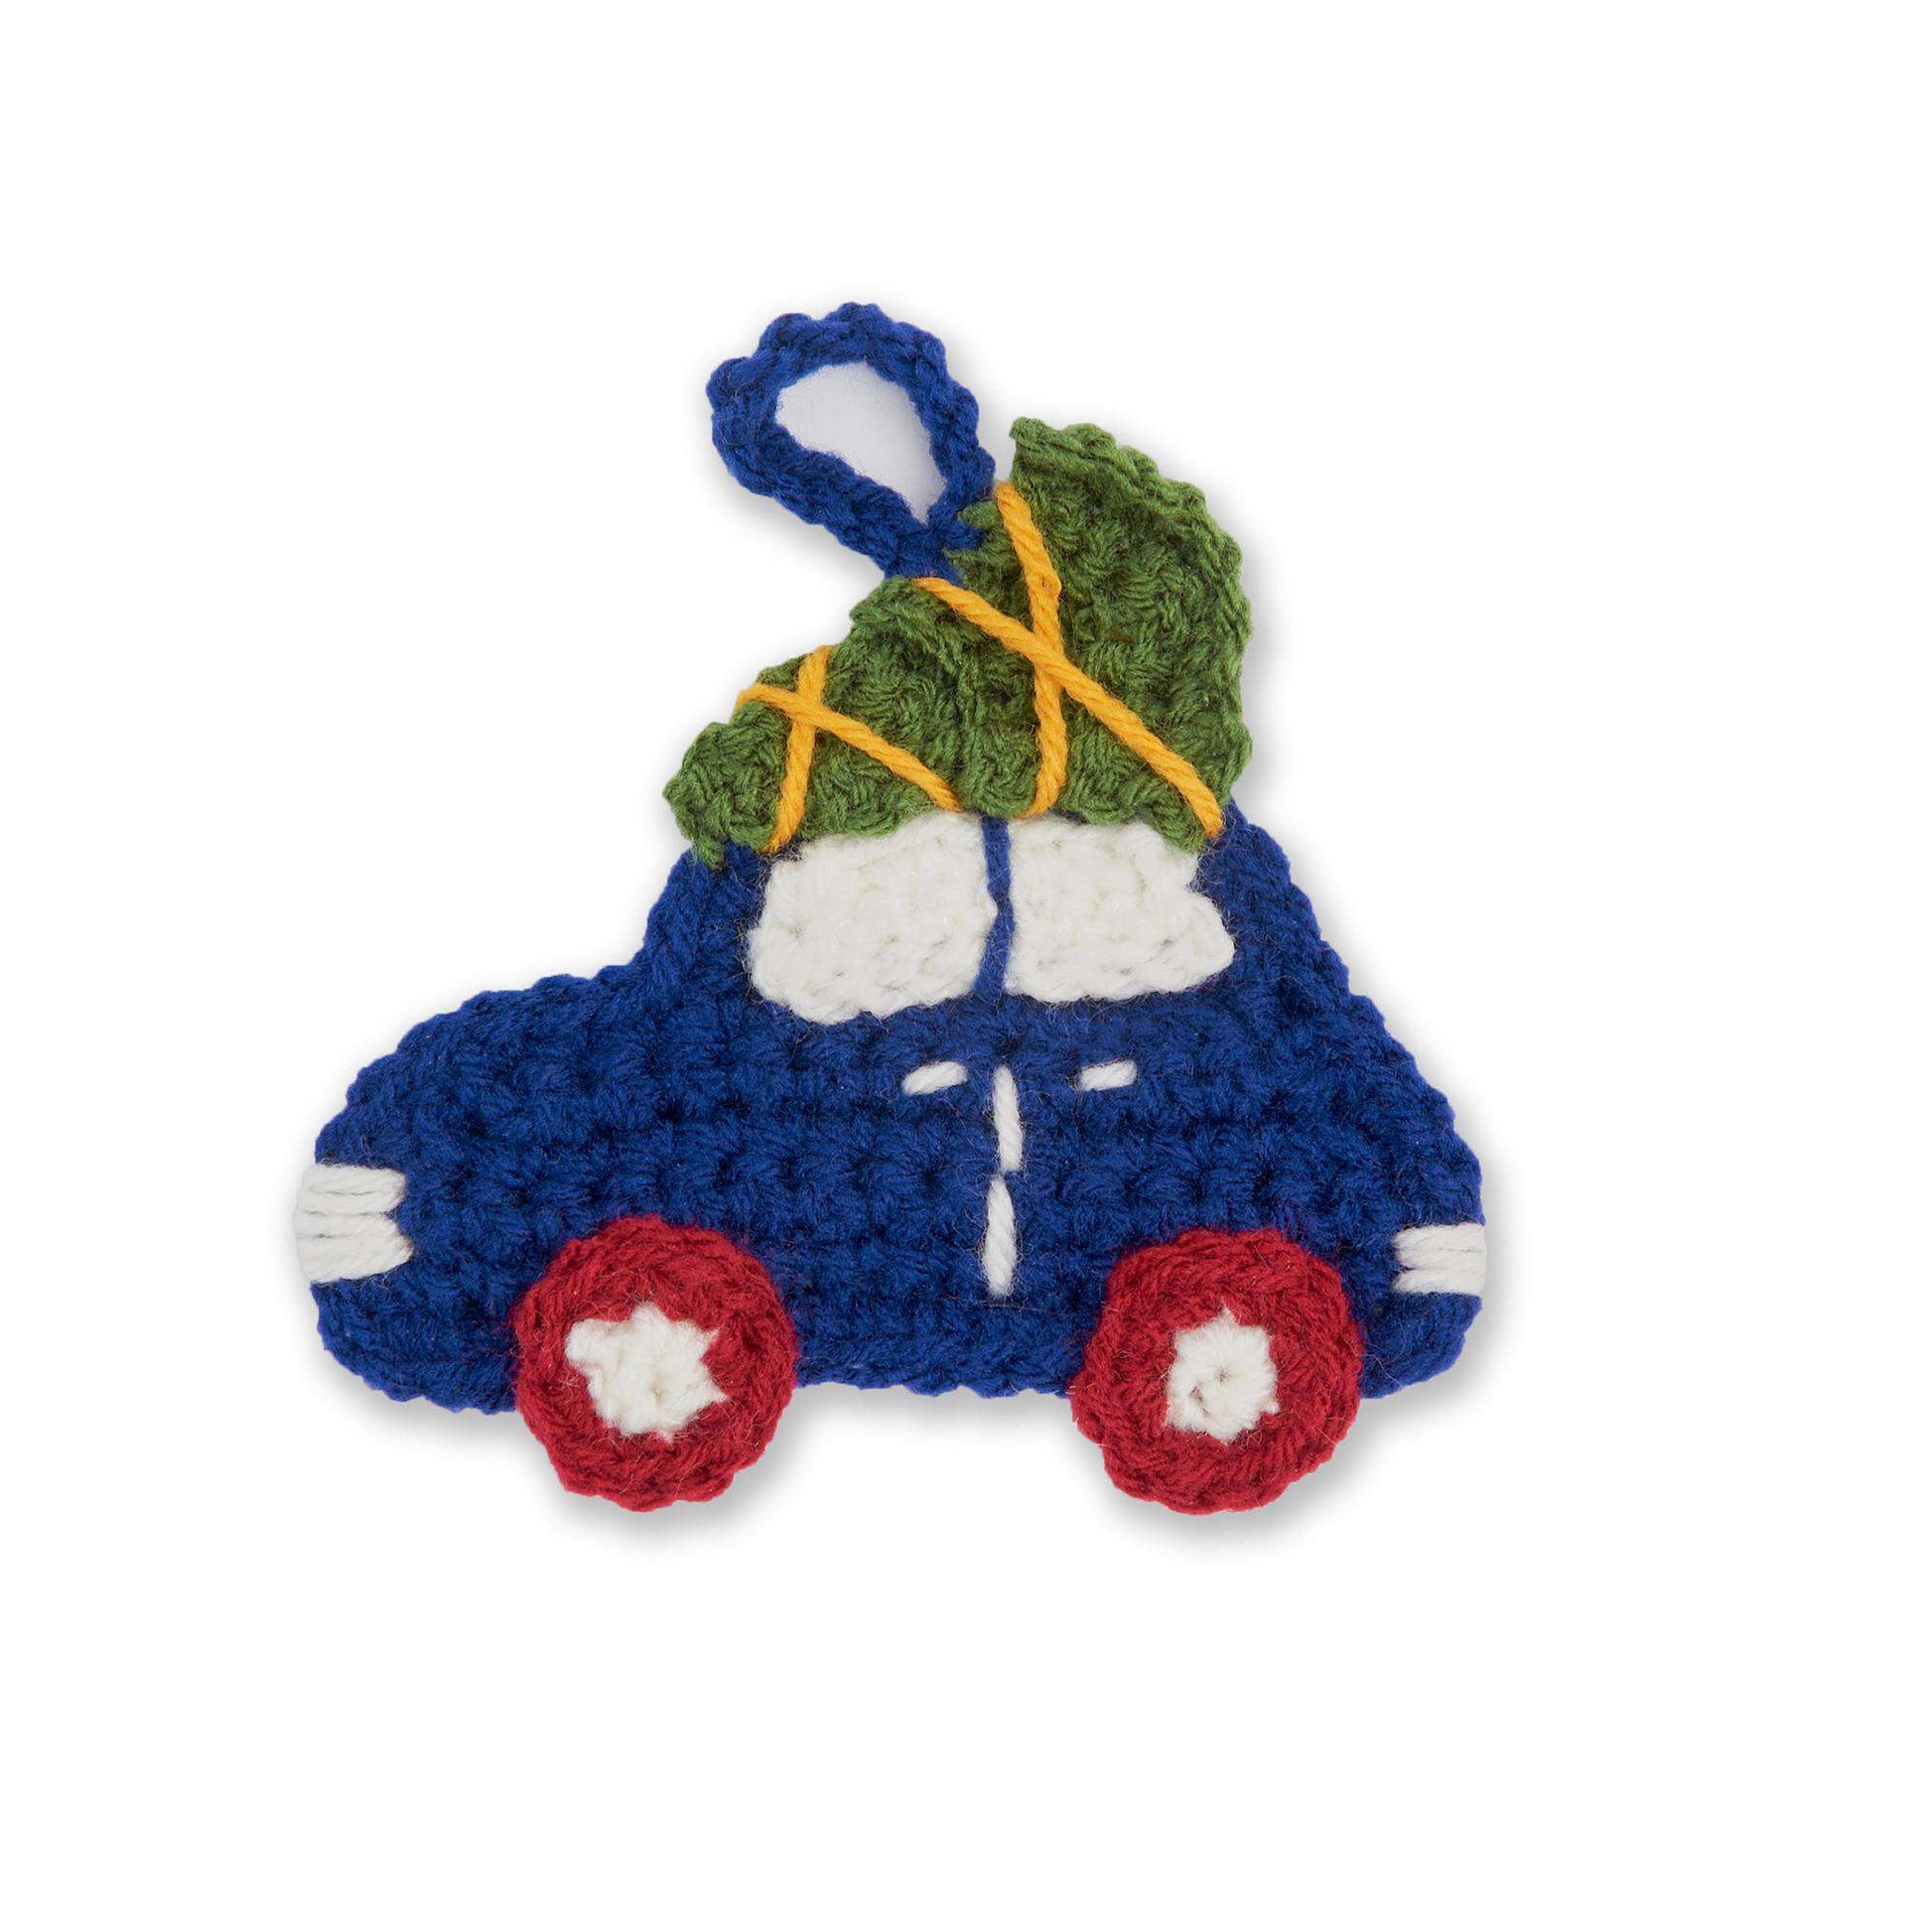 Christmas crochet Christmas tree car accessories, amigurumi car